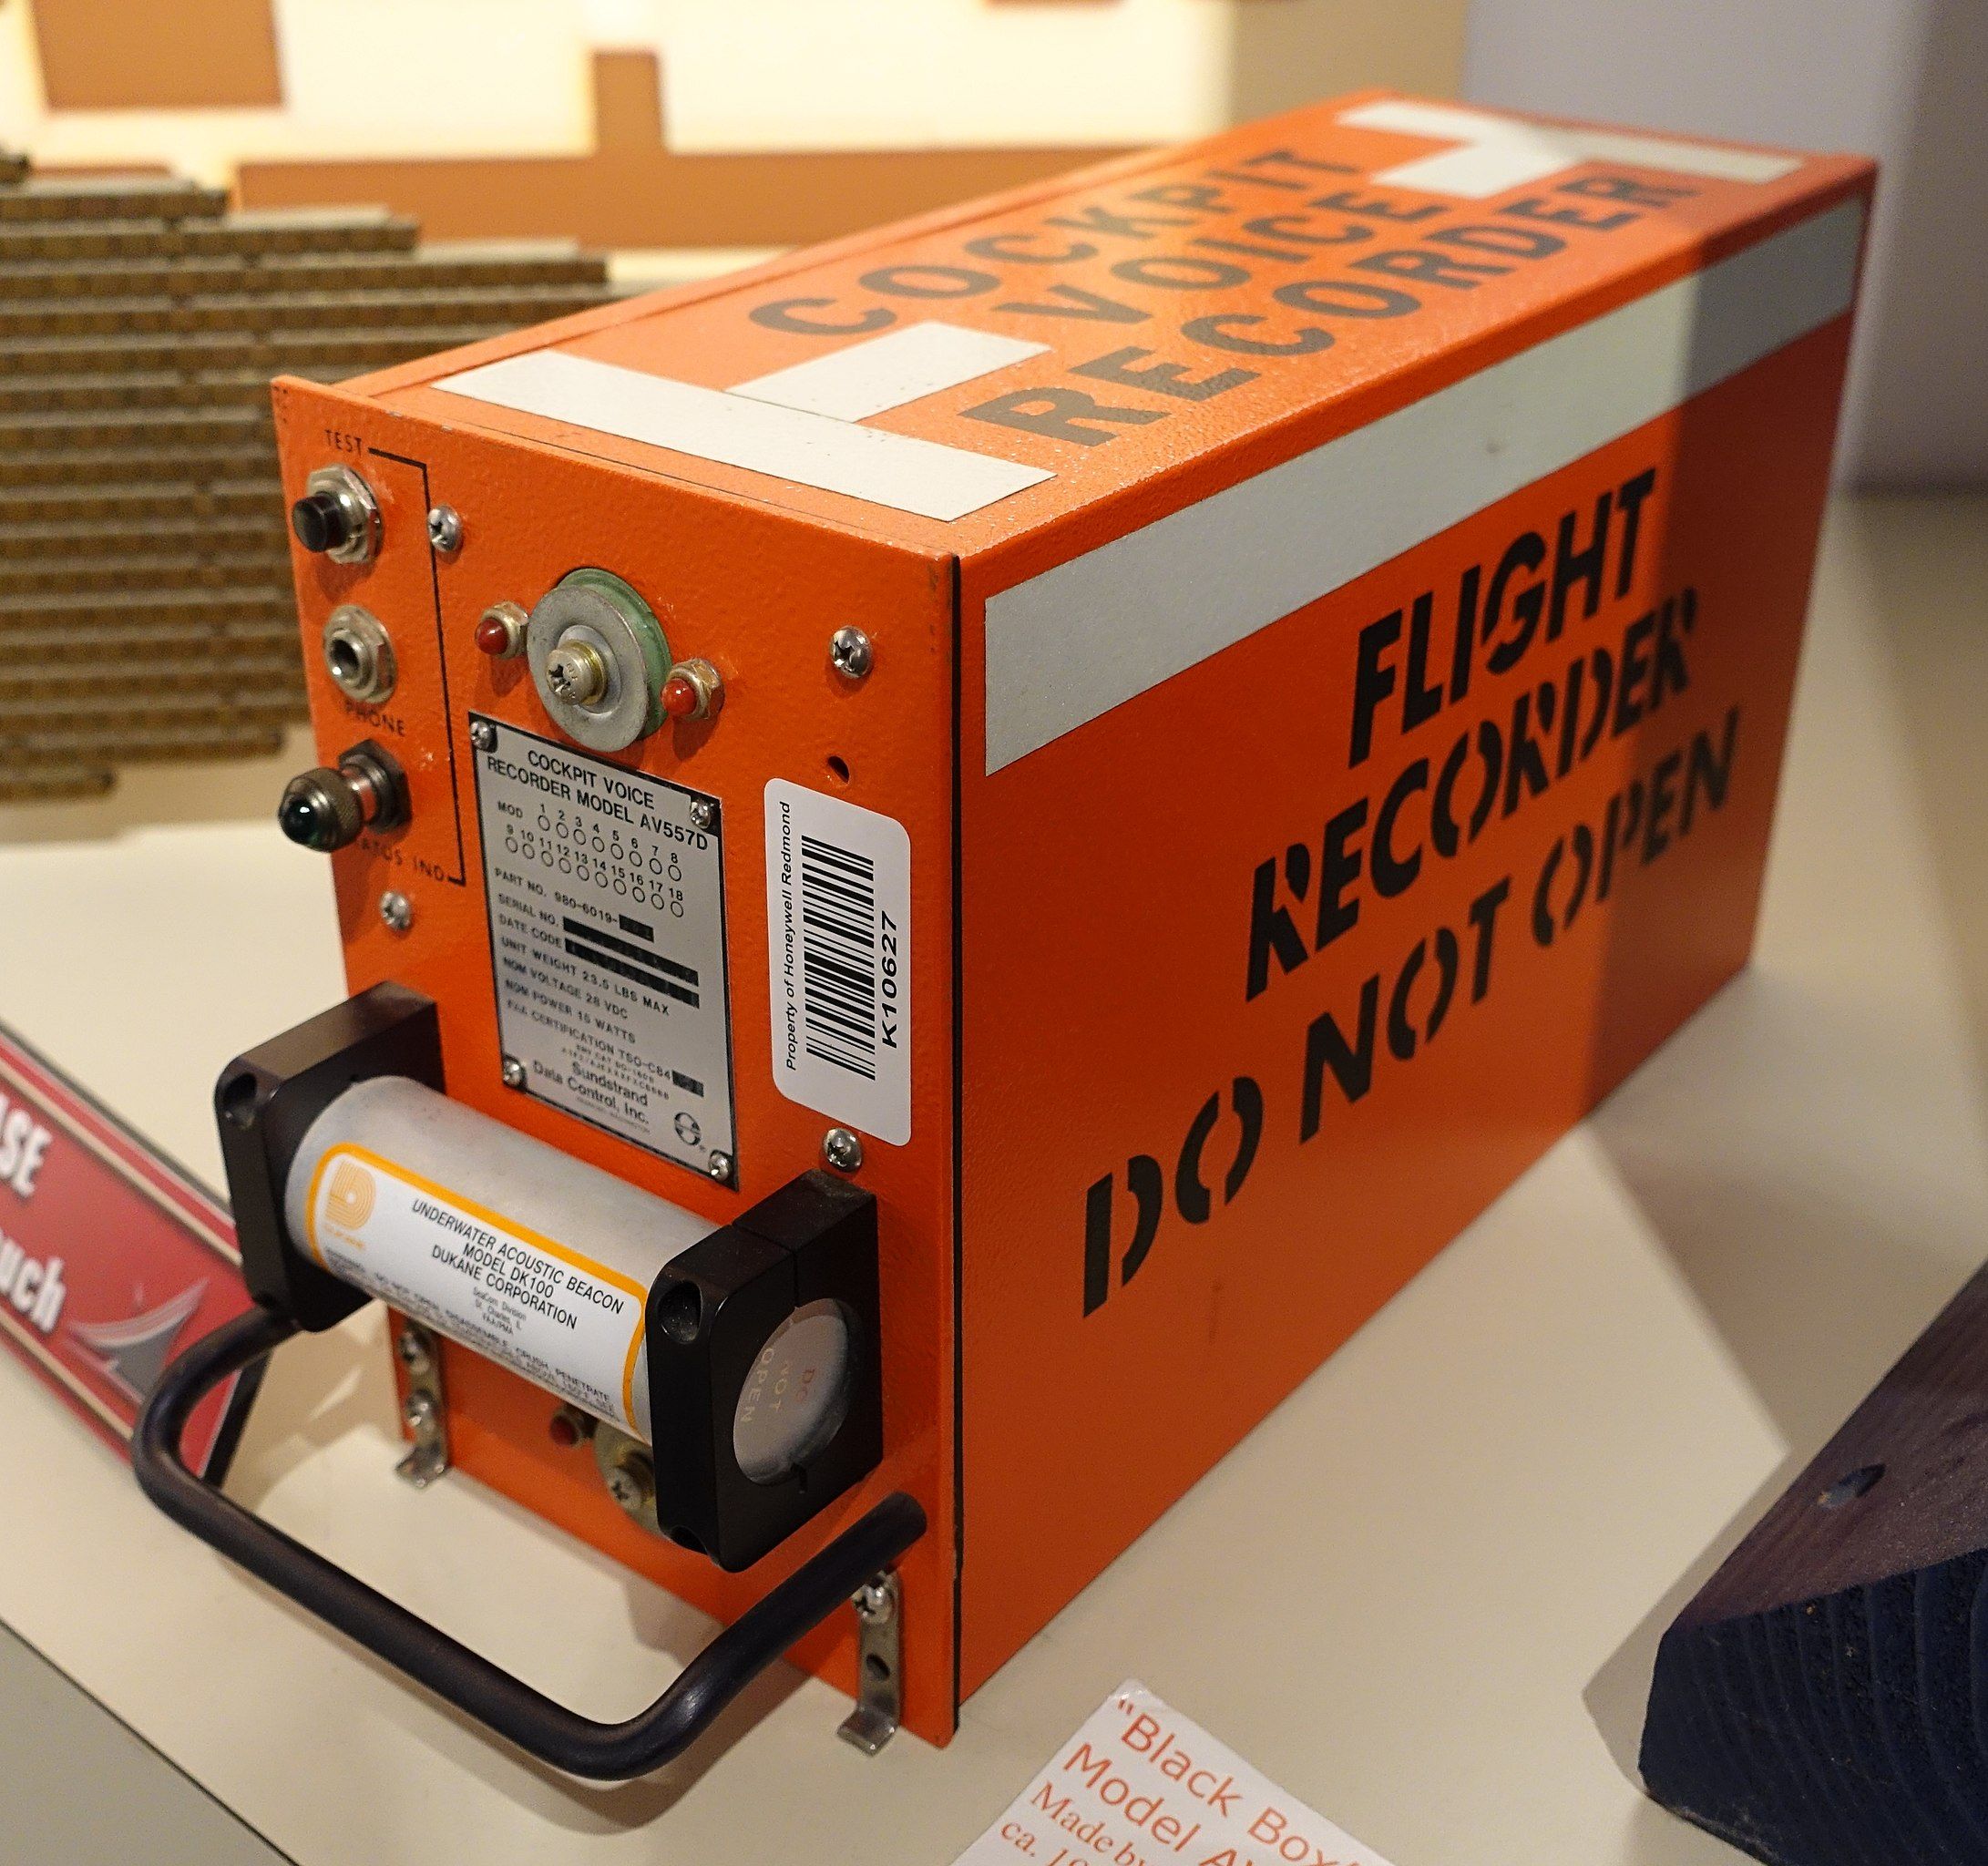 Black Box flight data recorder